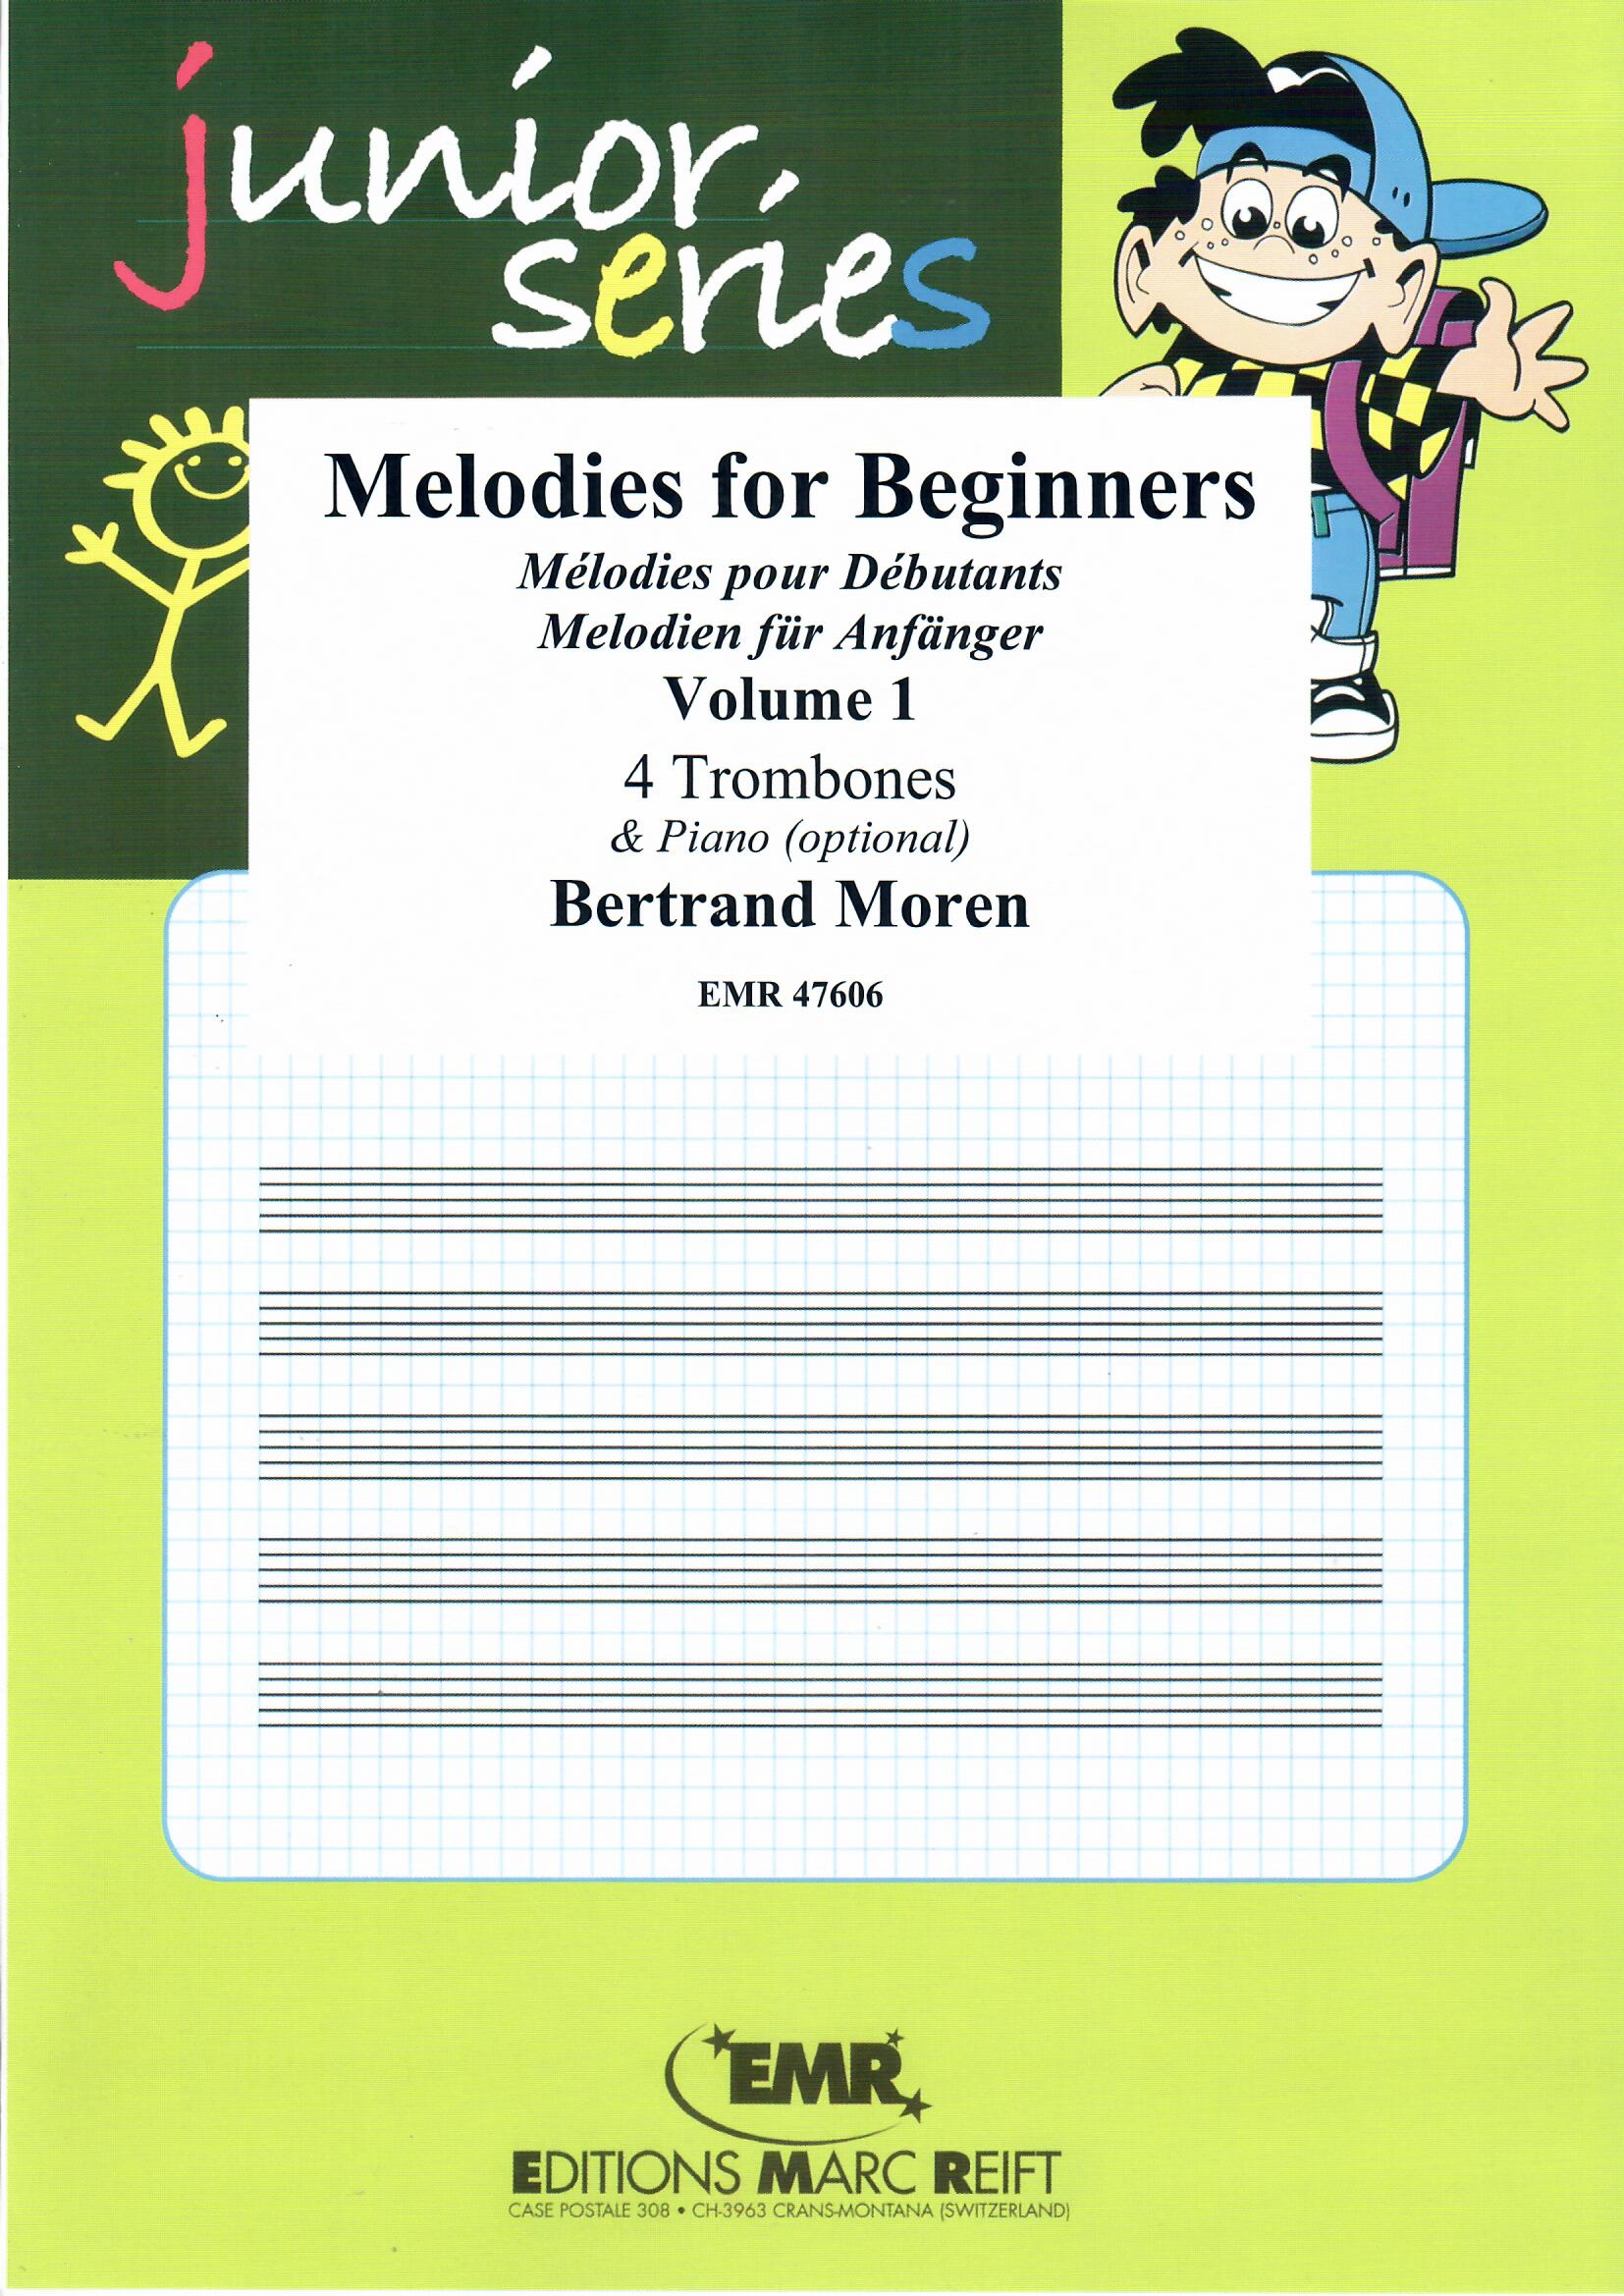 MELODIES FOR BEGINNERS VOLUME 1 - Trombone Quartet